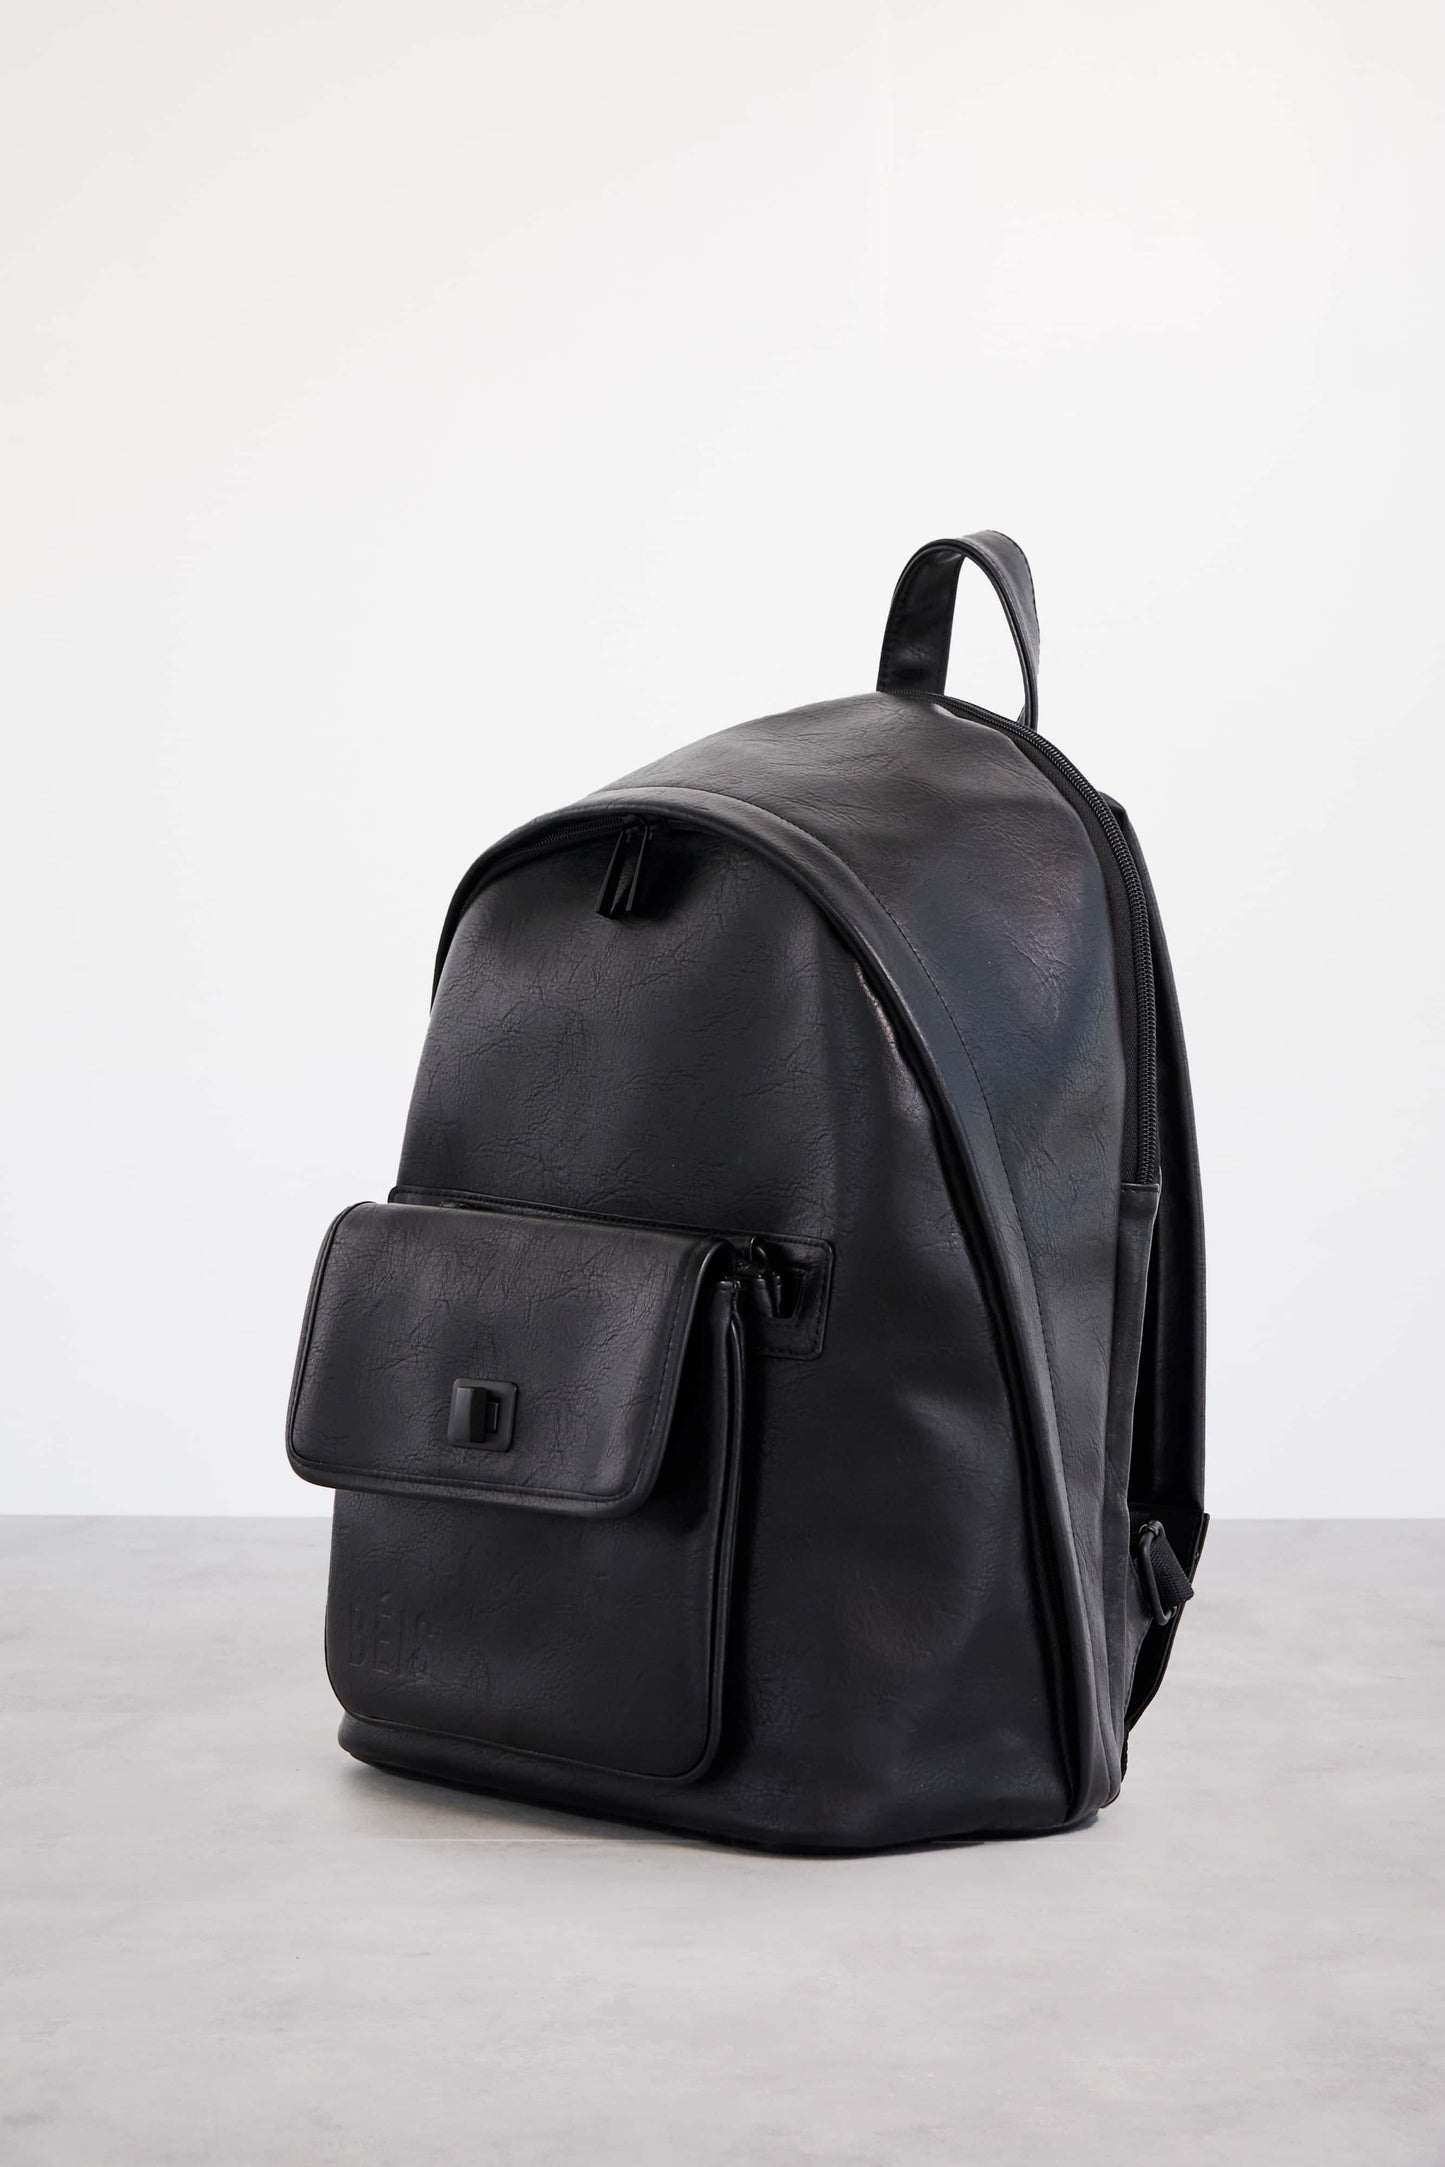 Backpack 2 in 1 Black Front